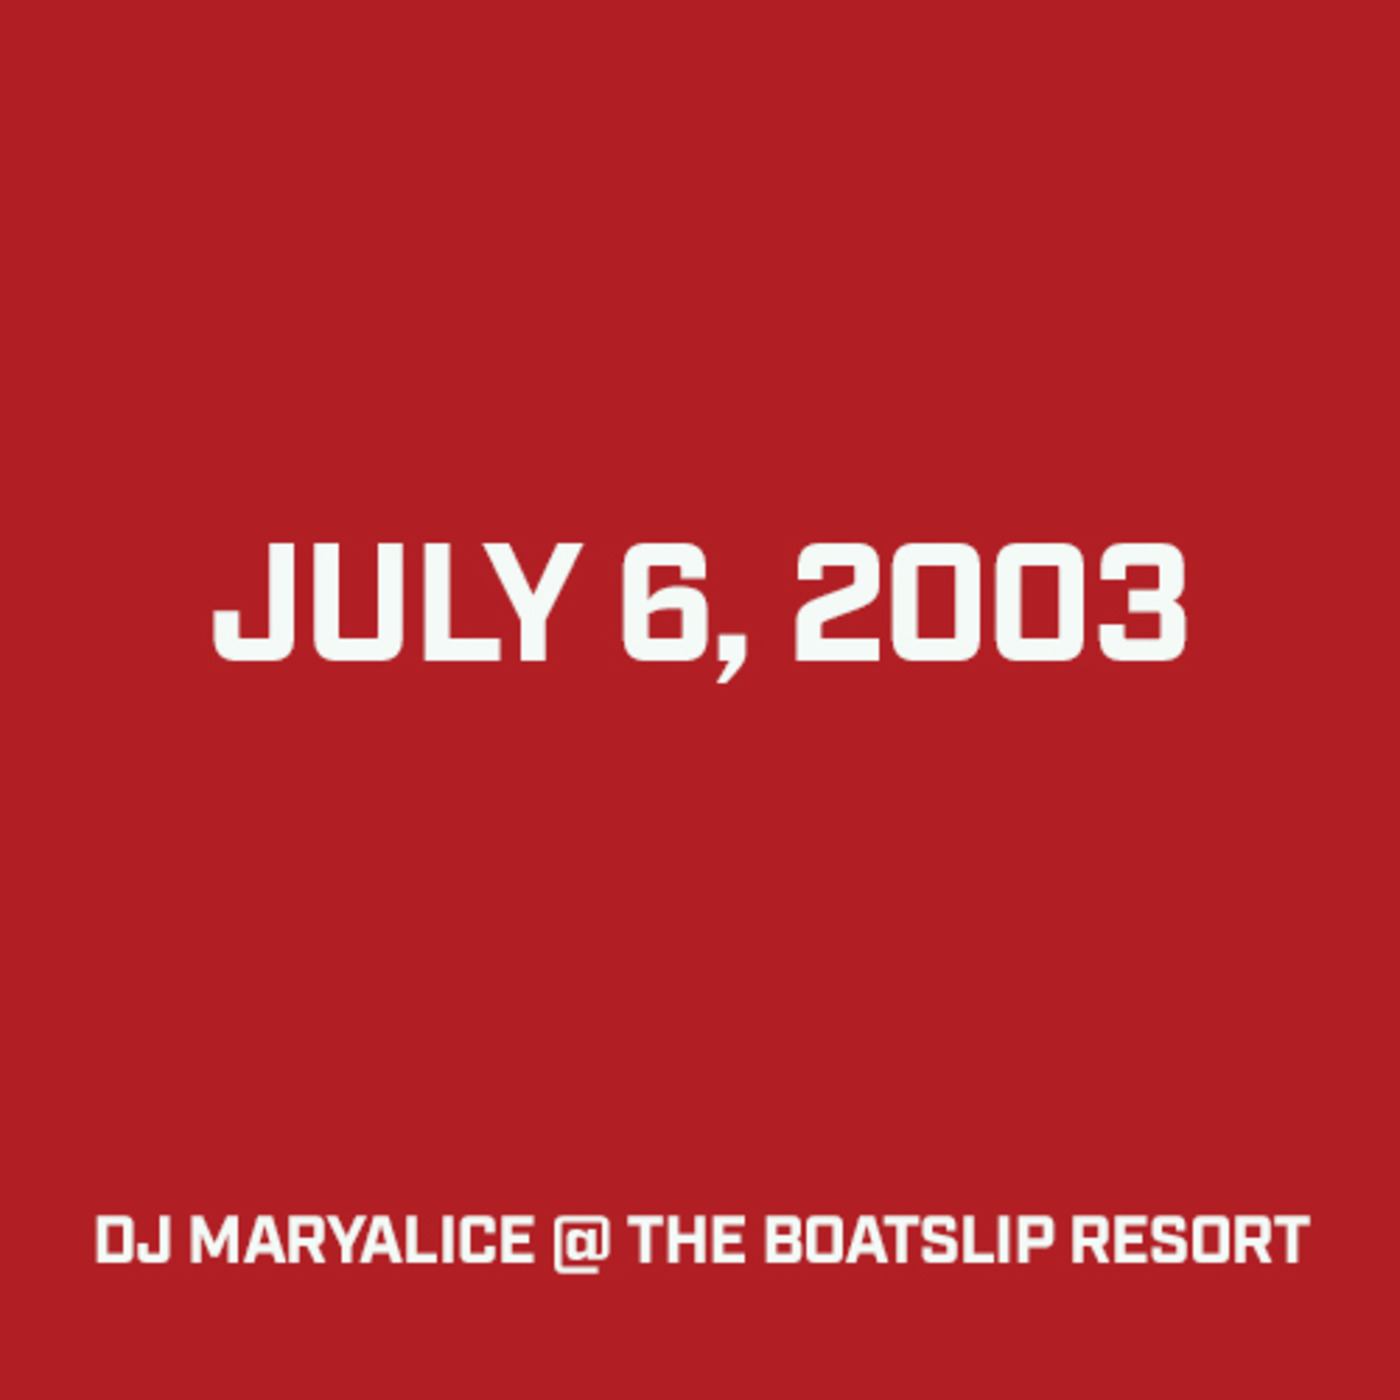 Episode 17: DJ Maryalice @ the Boatslip Resort : July 6, 2003